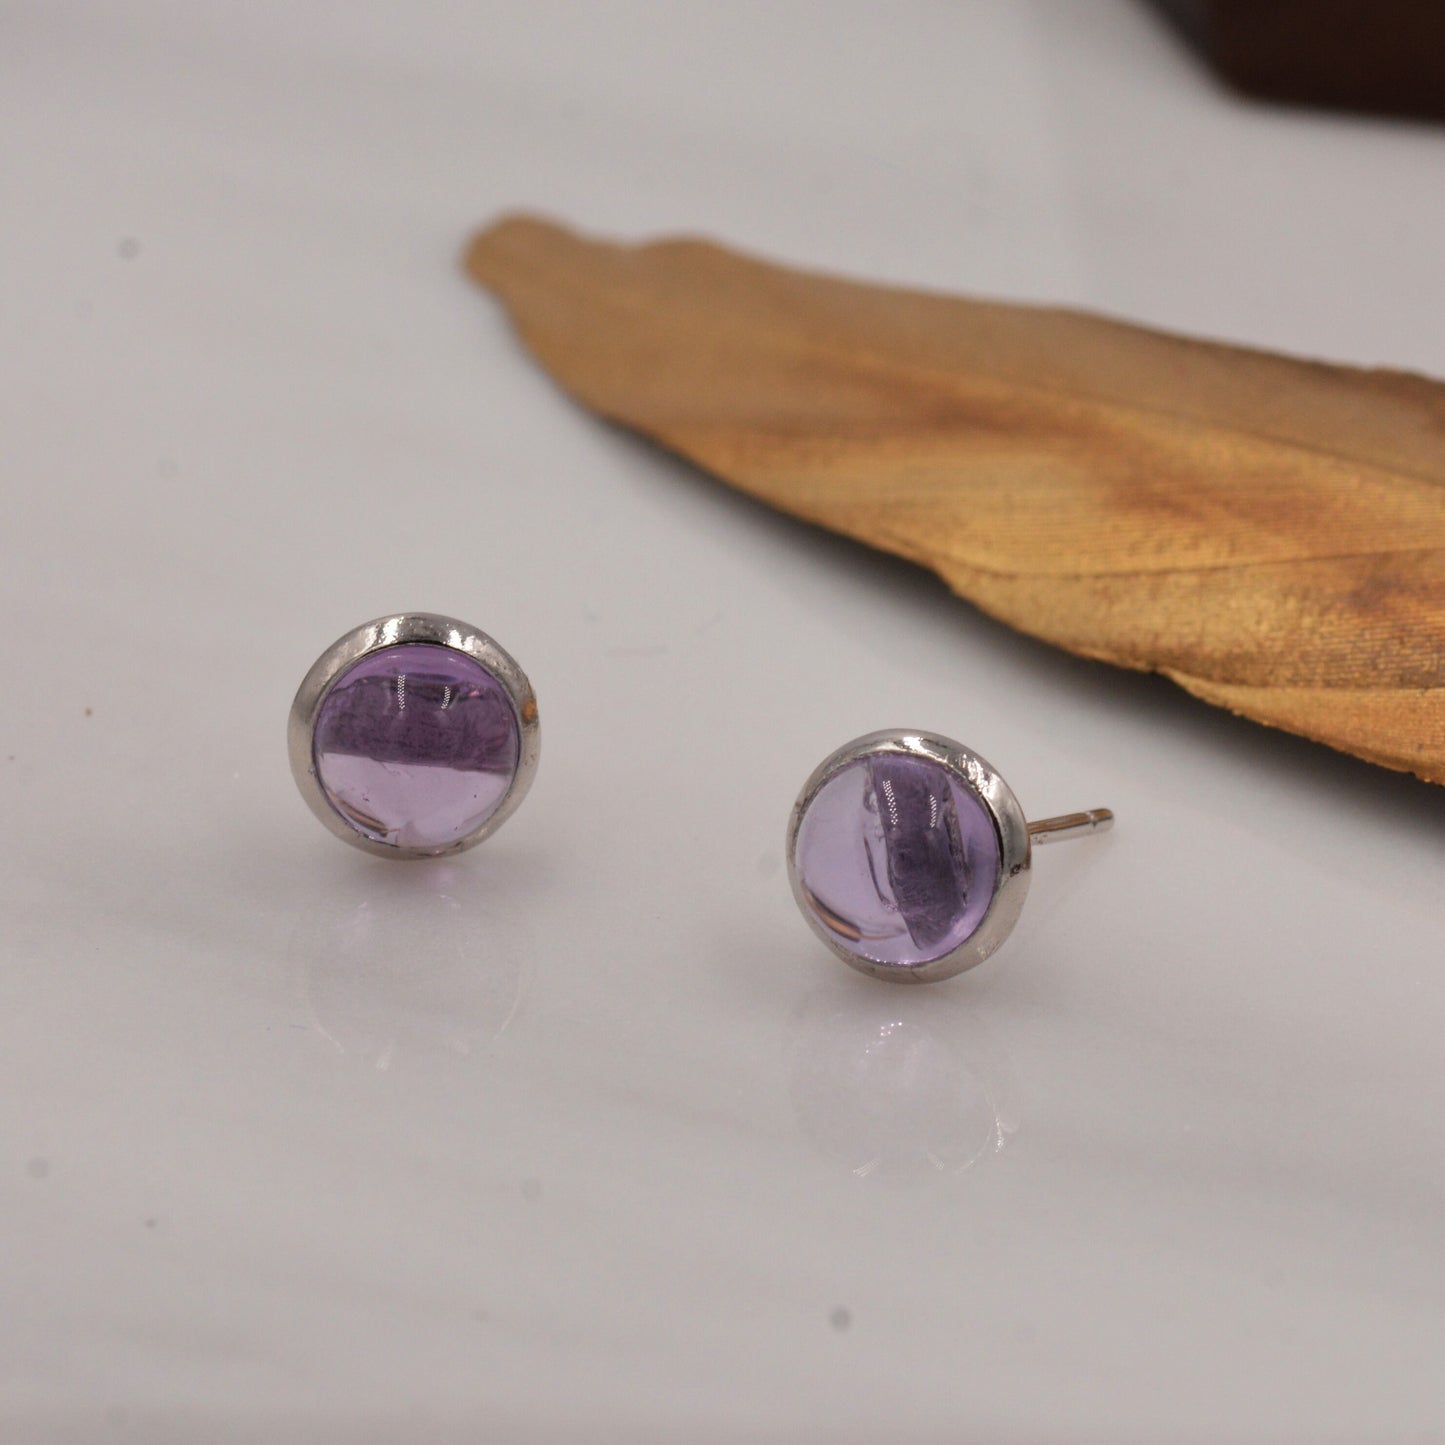 Natural Amethyst Stud Earrings in Sterling Silver, 6mm Amethyst, Lilac Purple, Light Purple, Genuine Gemstone, Minimalist